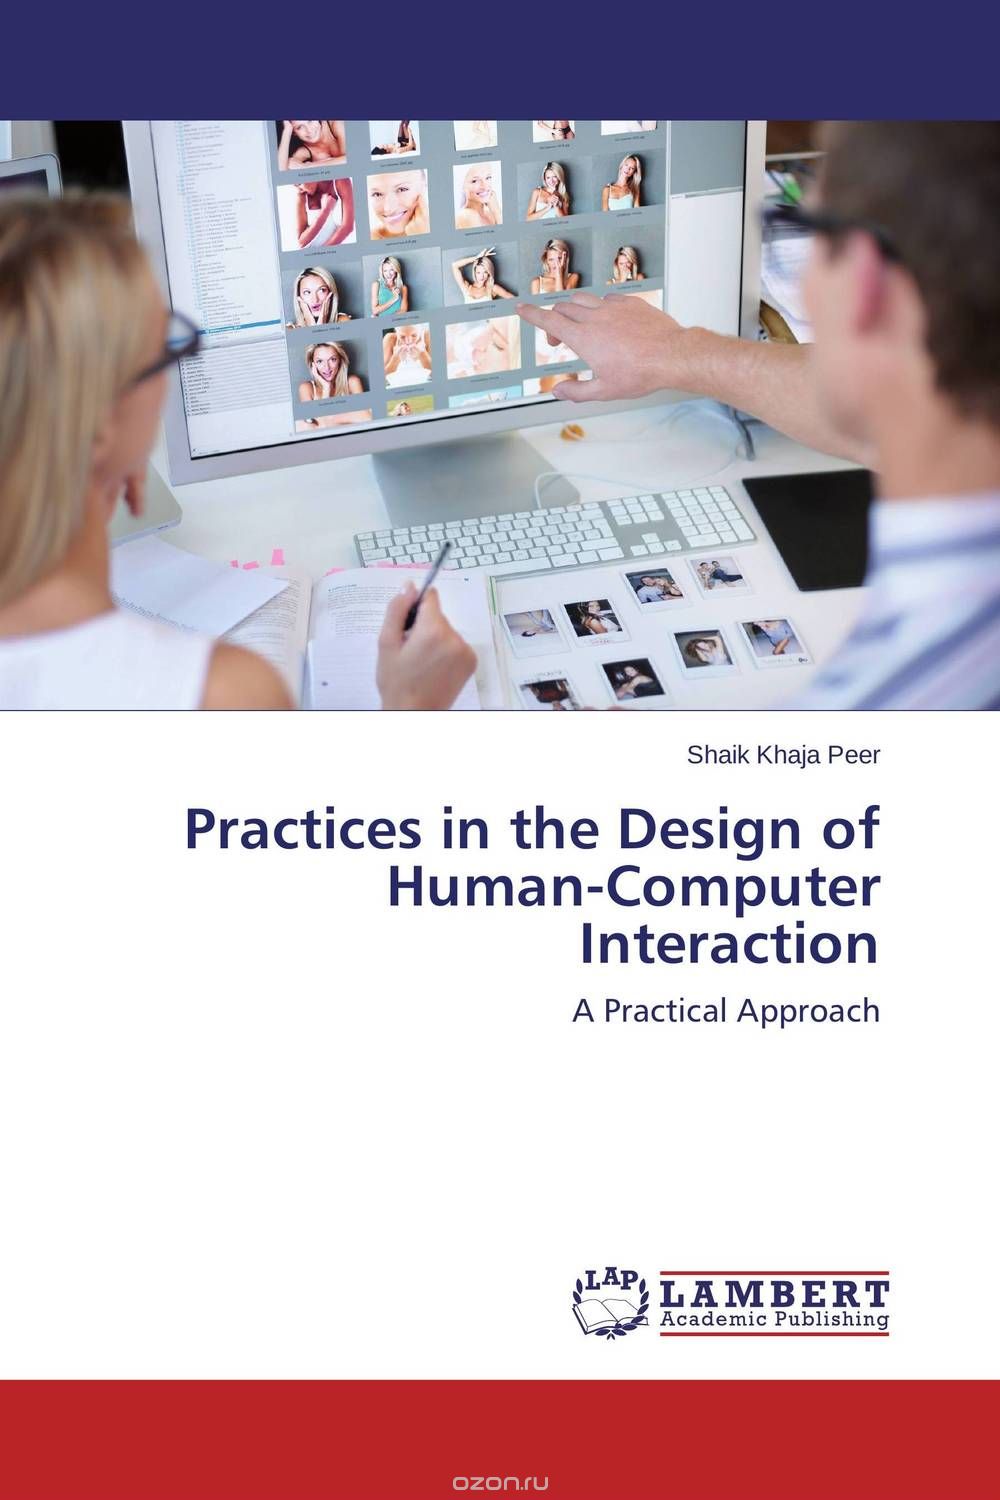 Скачать книгу "Practices in the Design of Human-Computer Interaction"